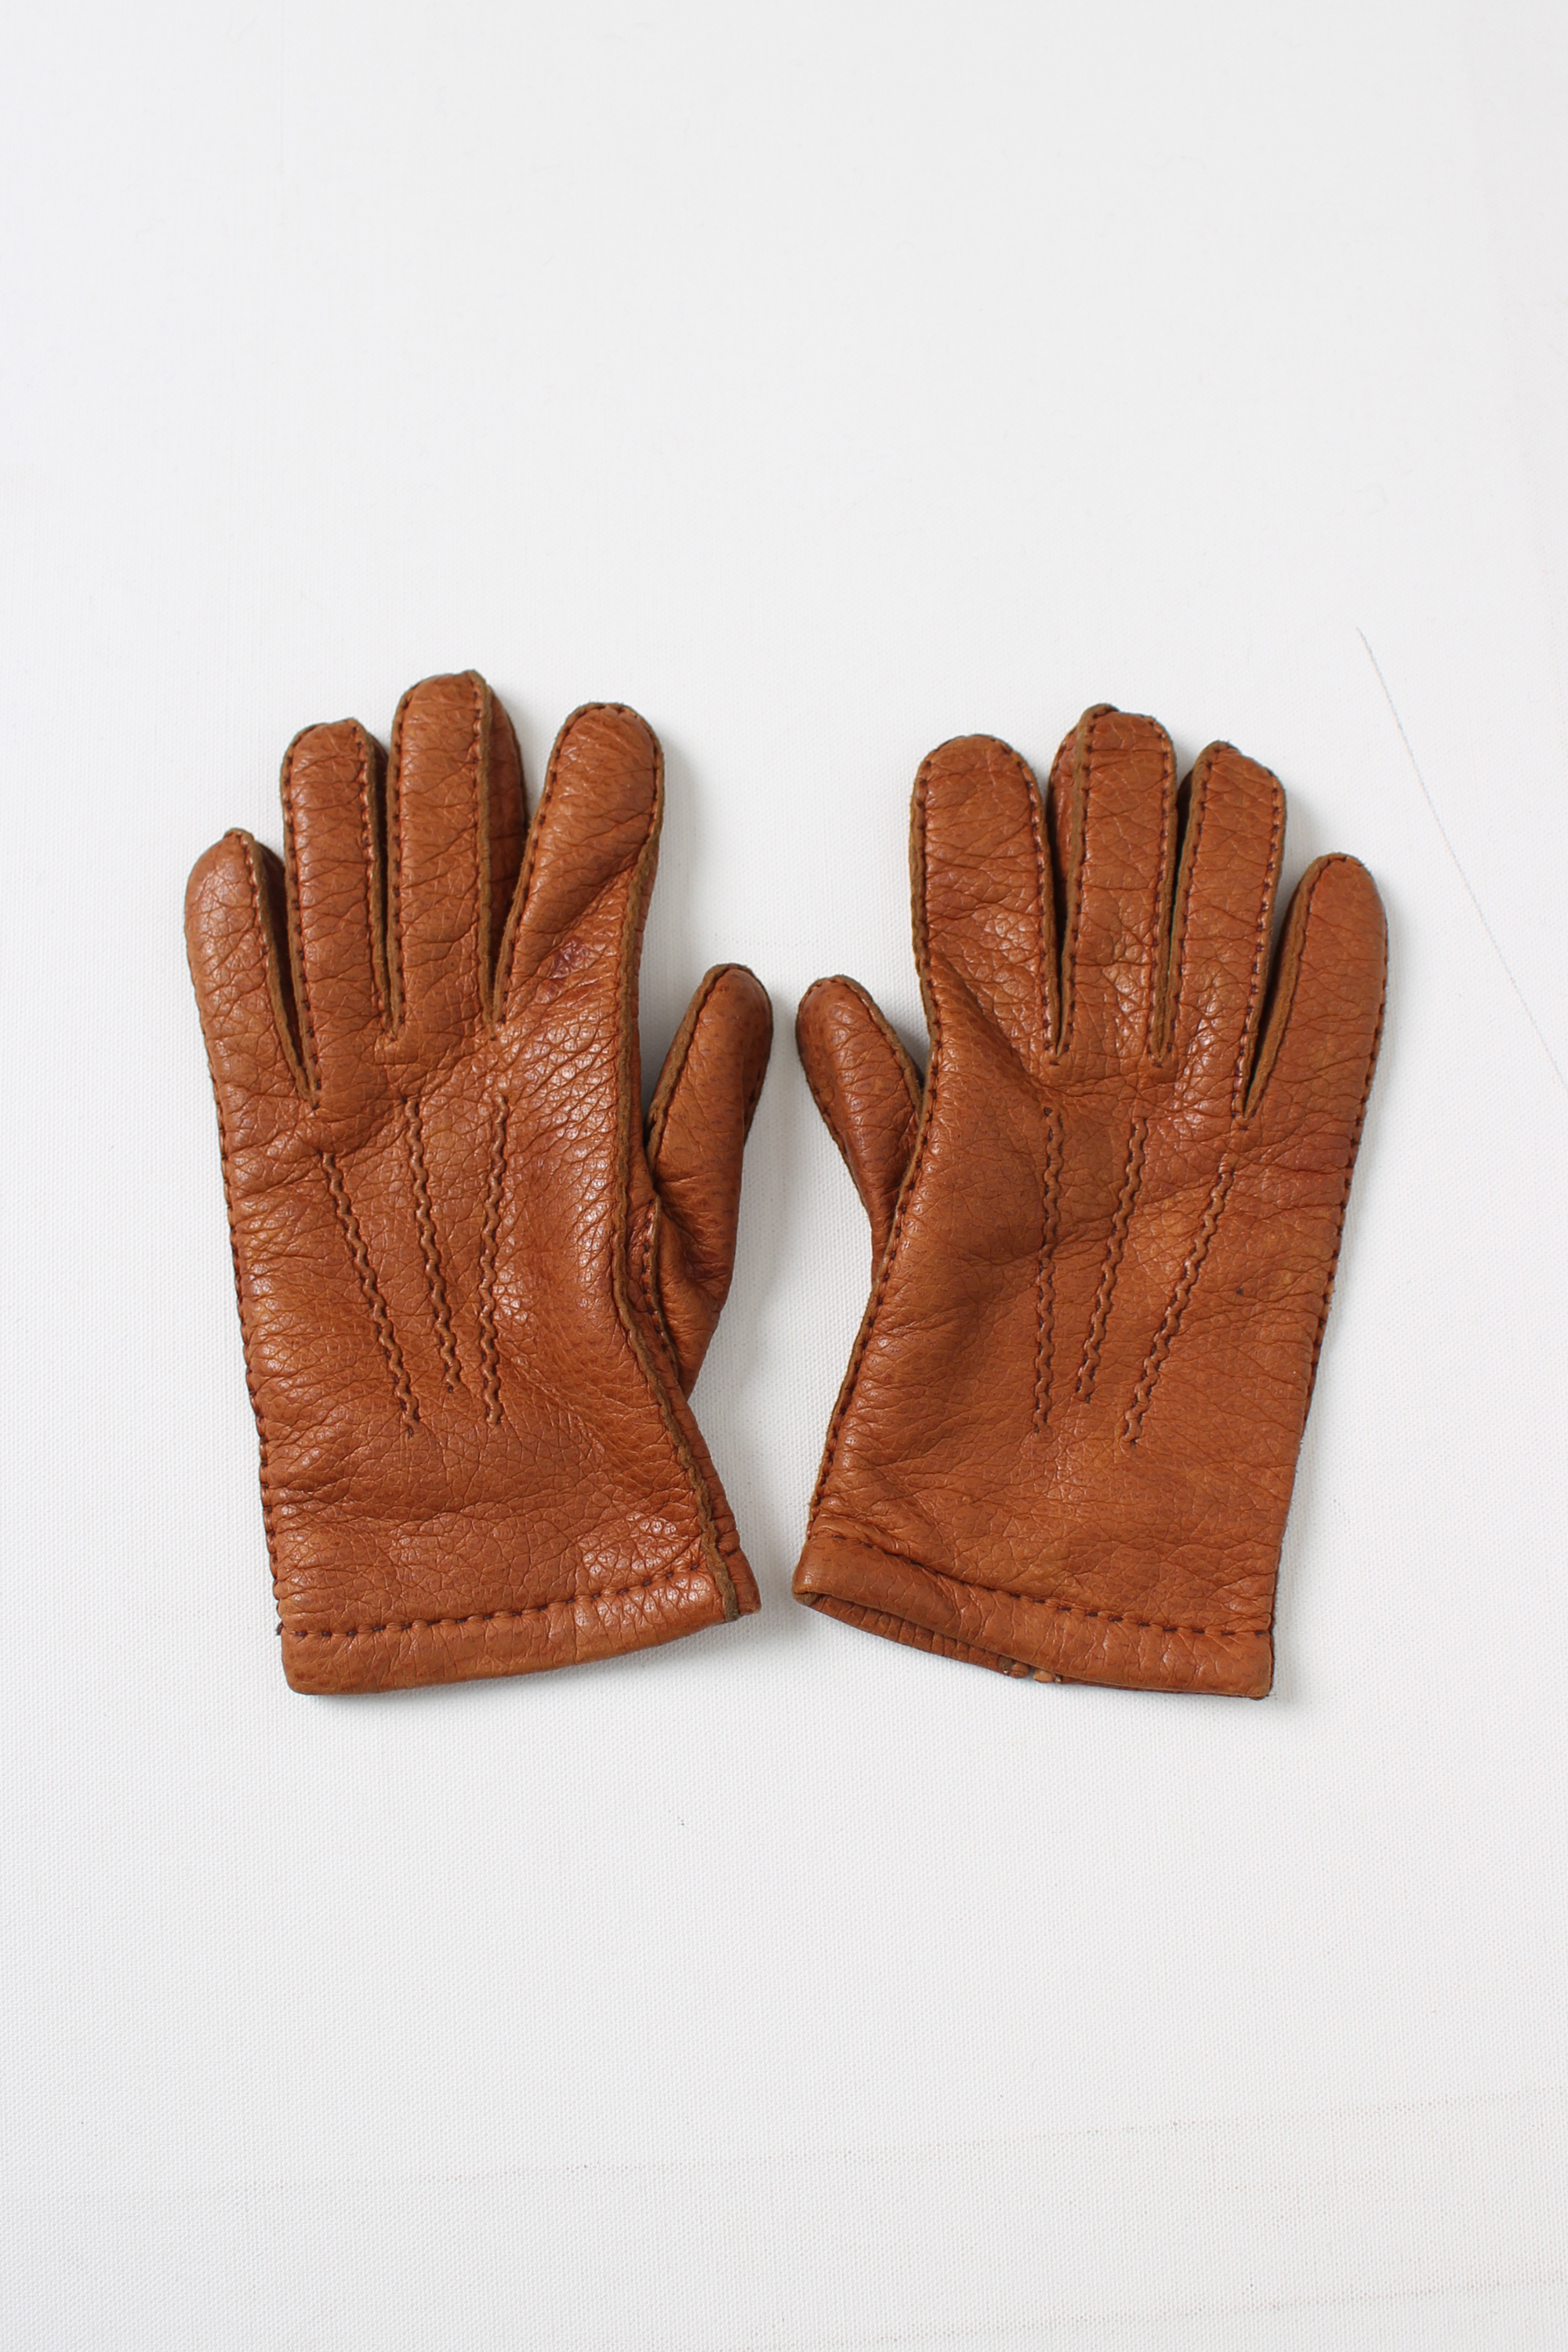 Loro Piana leather gloves